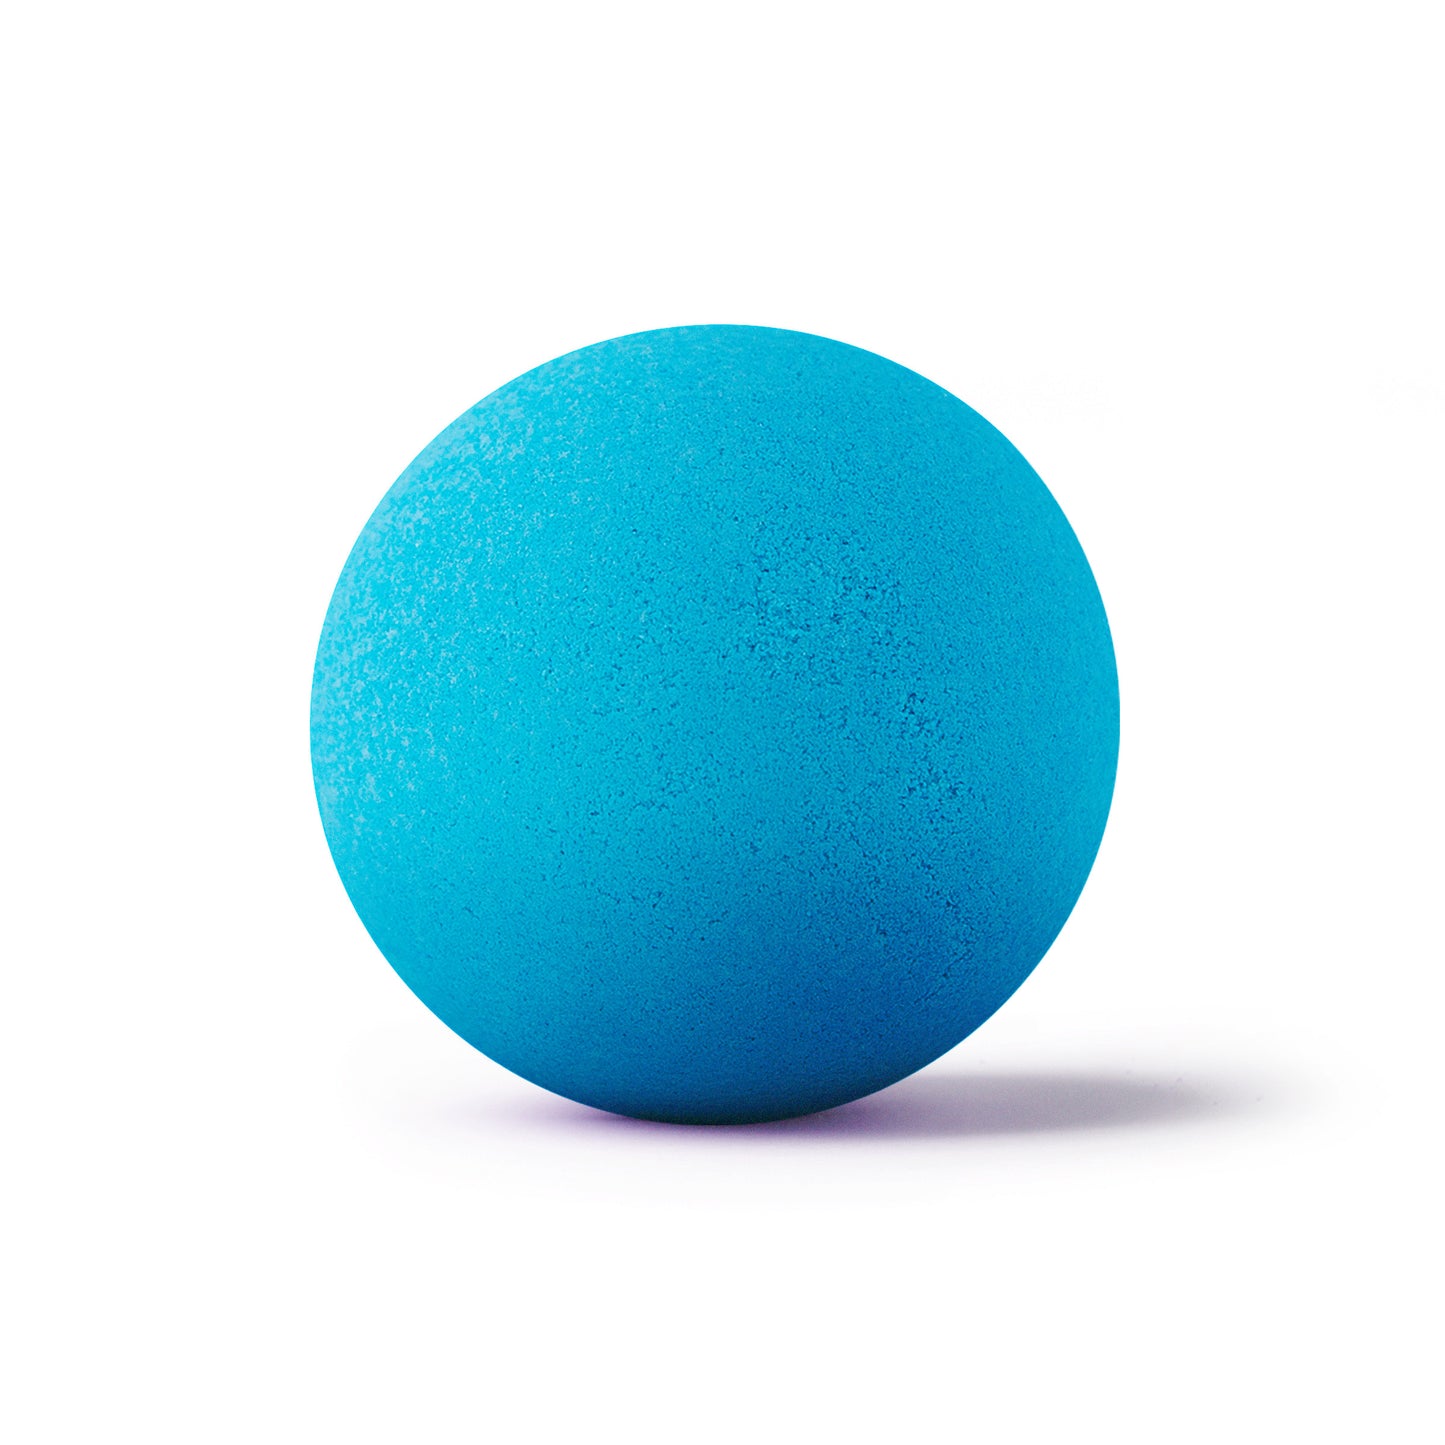 a blue bath bomb